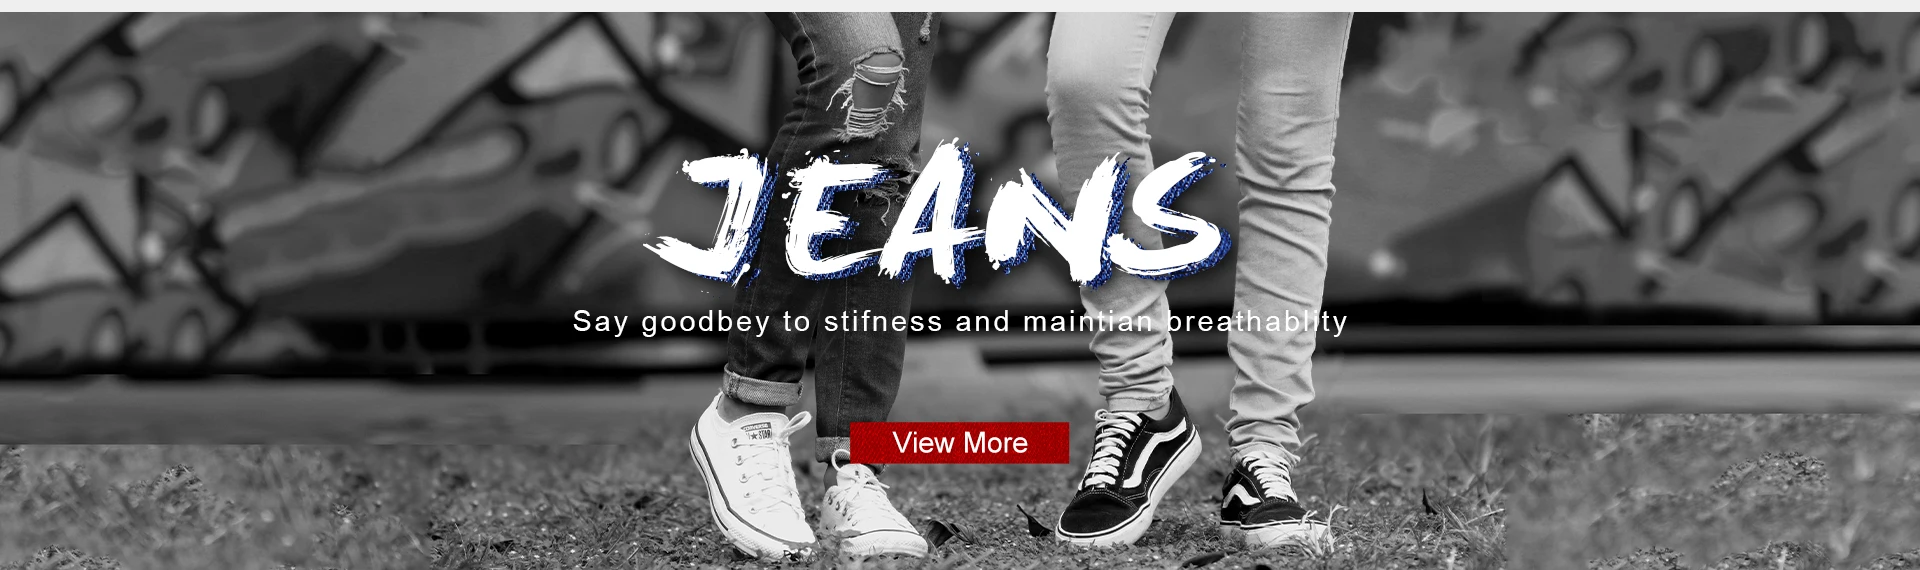 Guangzhou Aipa Technology Co., Ltd. - jeans, Men's clothing